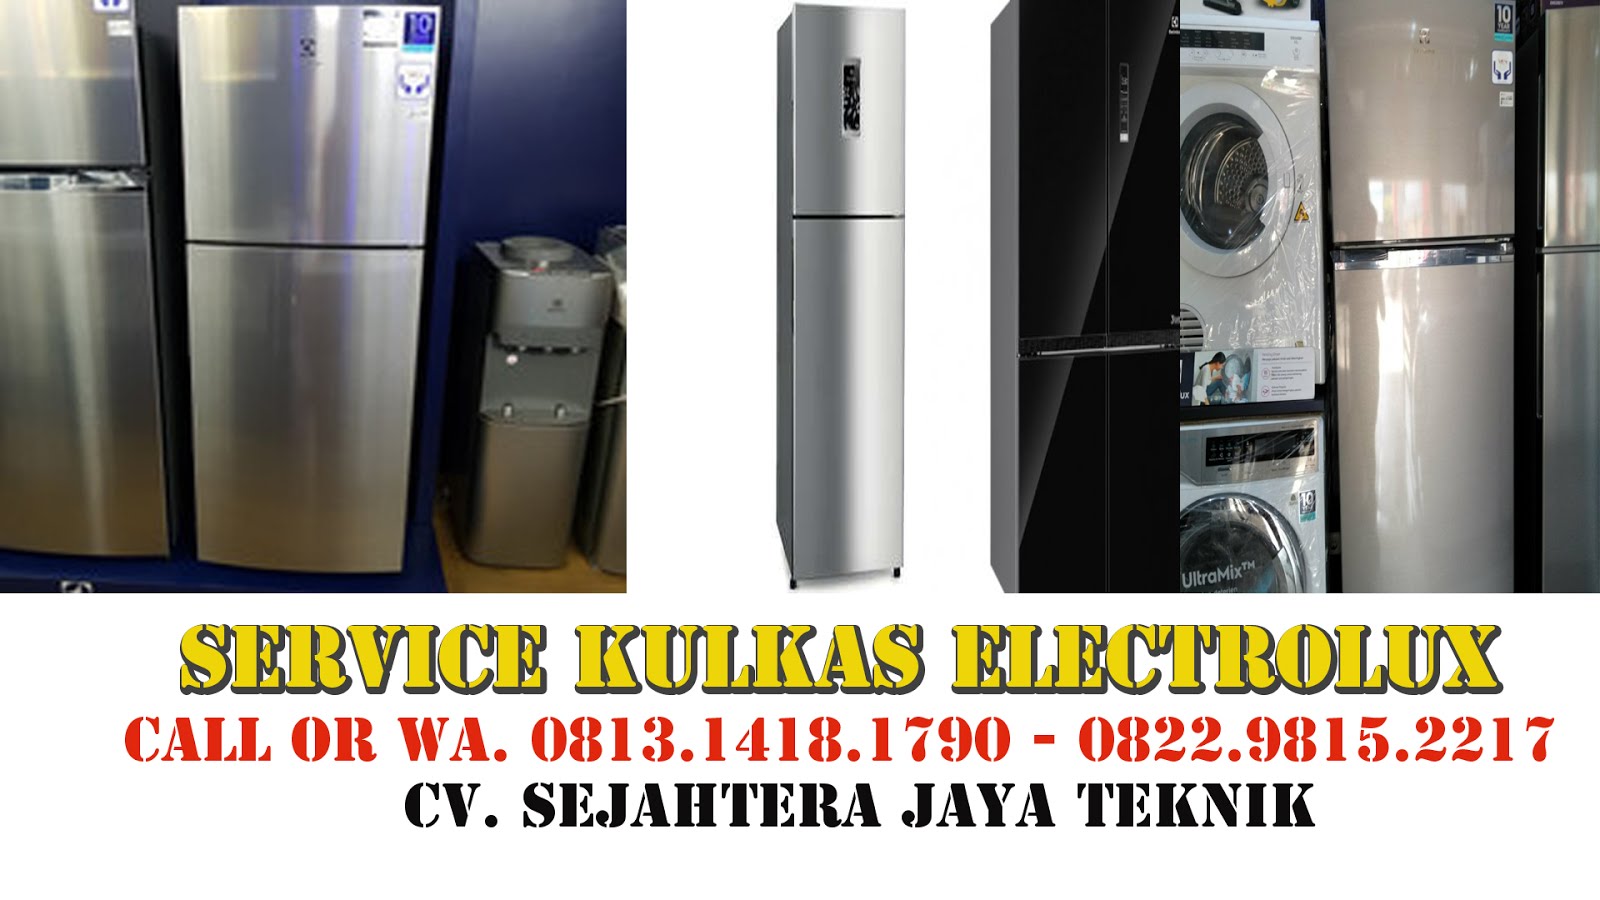 Service Kulkas Electrolux di Jakarta Pusat